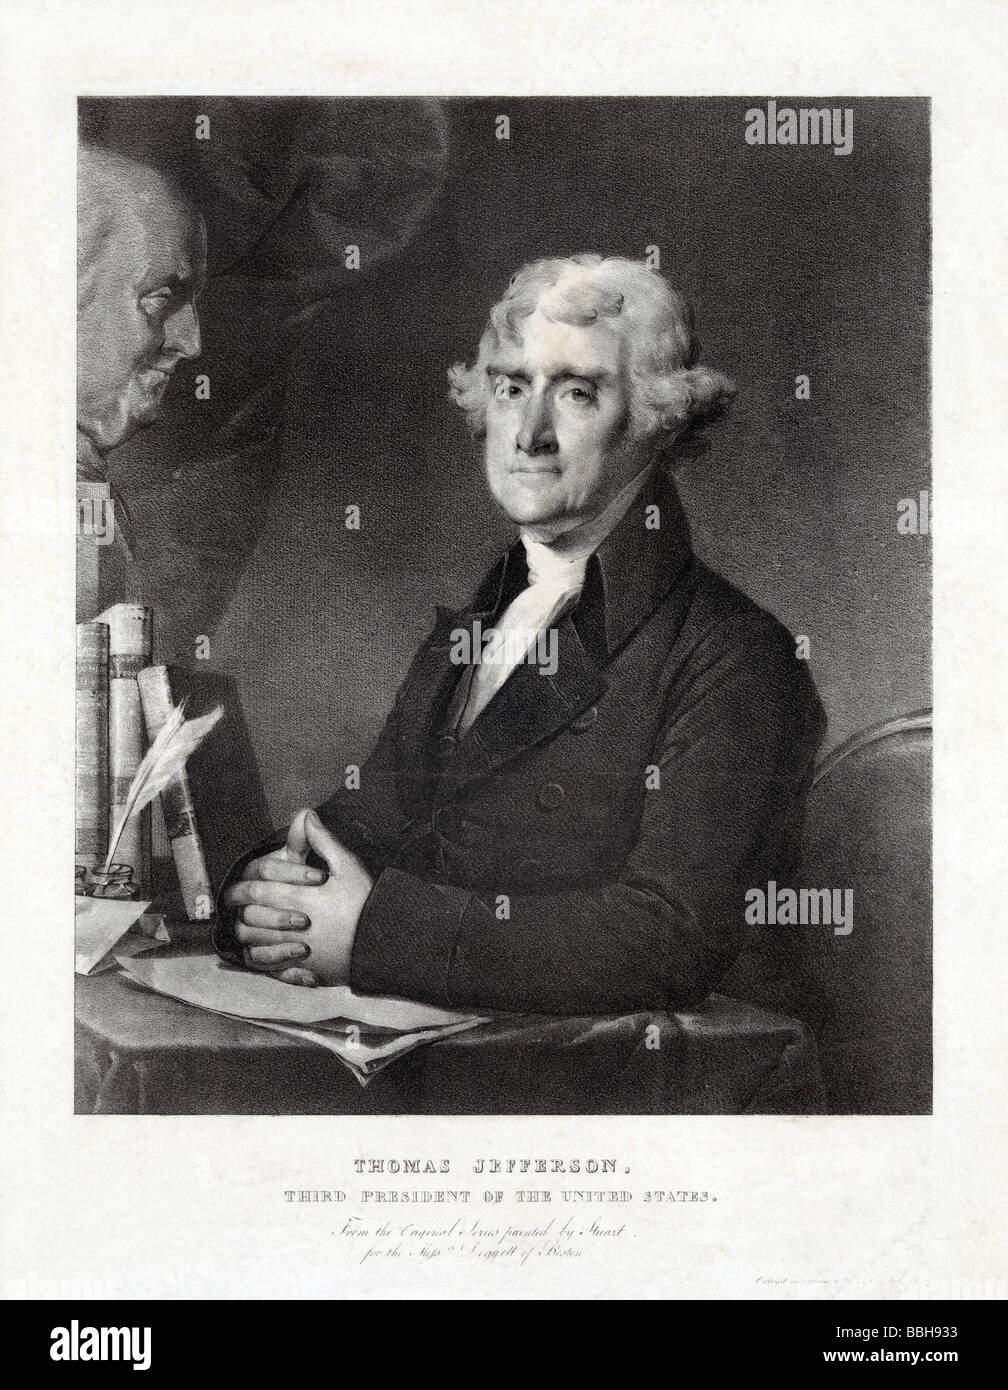 Portrait print circa 1828 of Thomas Jefferson (1743 – 1826), the third President of the United States (1801 - 1809). Stock Photo